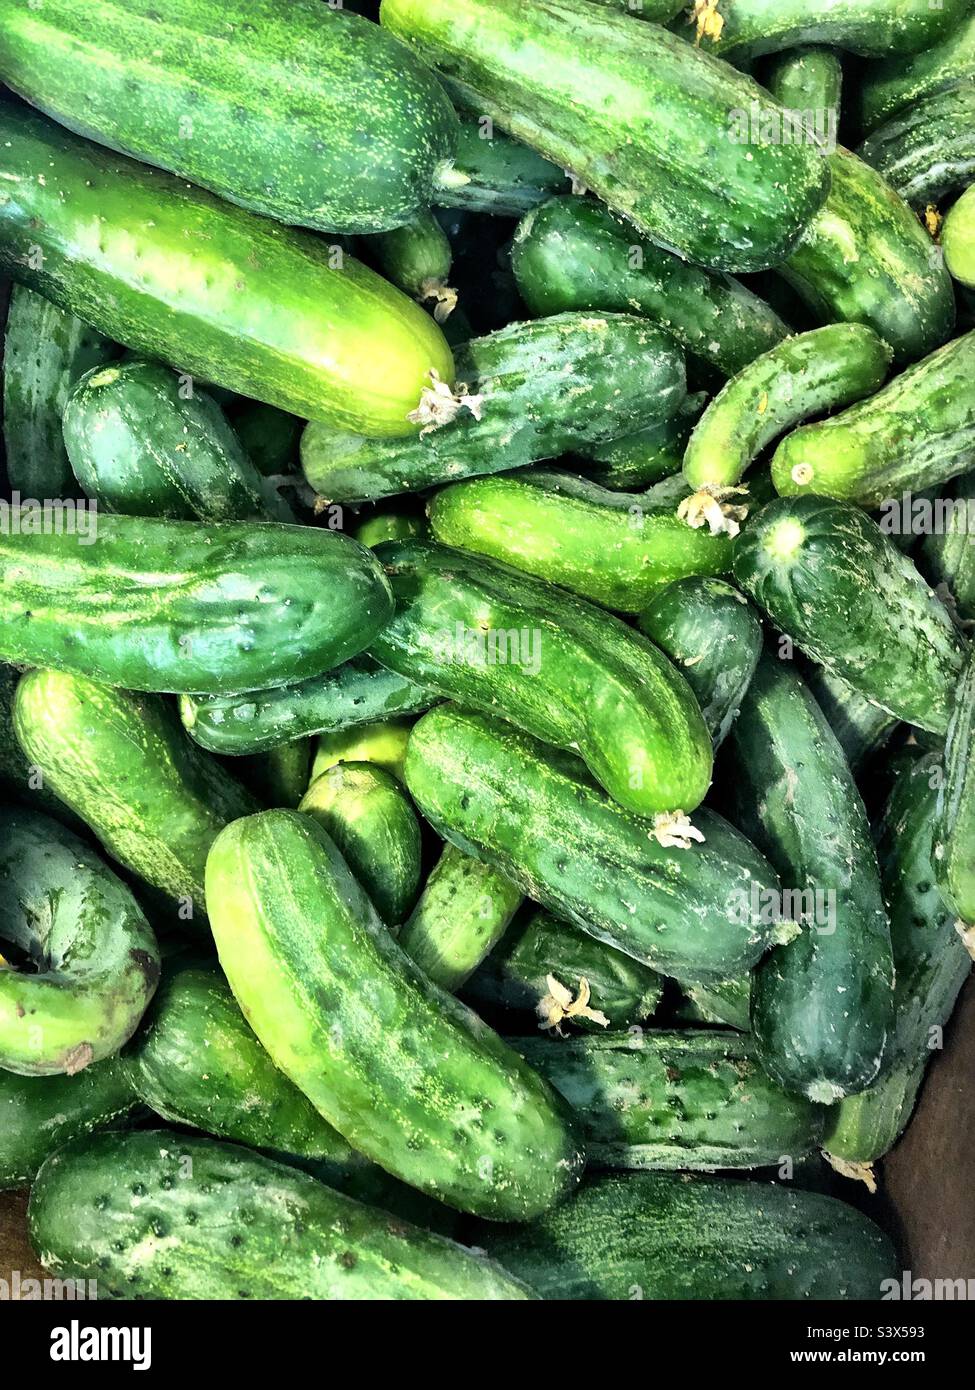 Ripe green pickling cucumbers Stock Photo